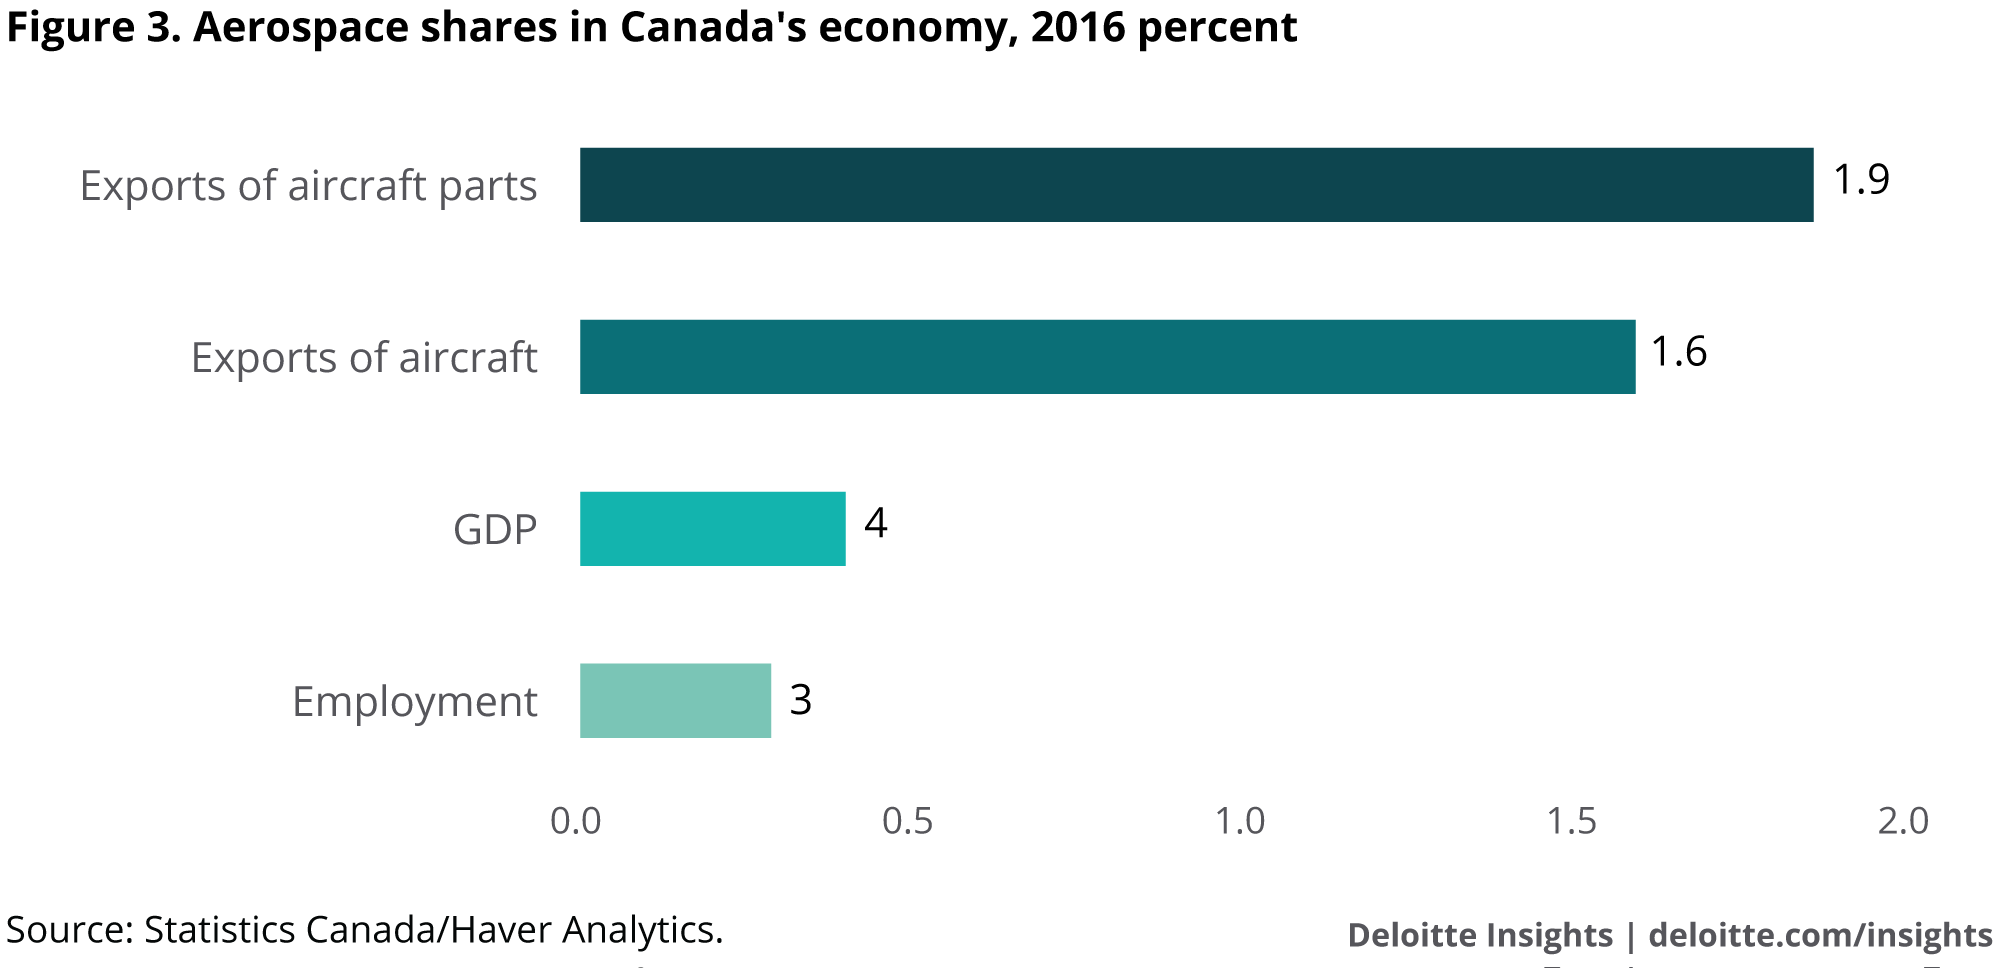 Aerospace shares in Canada's economy, 2016
percent